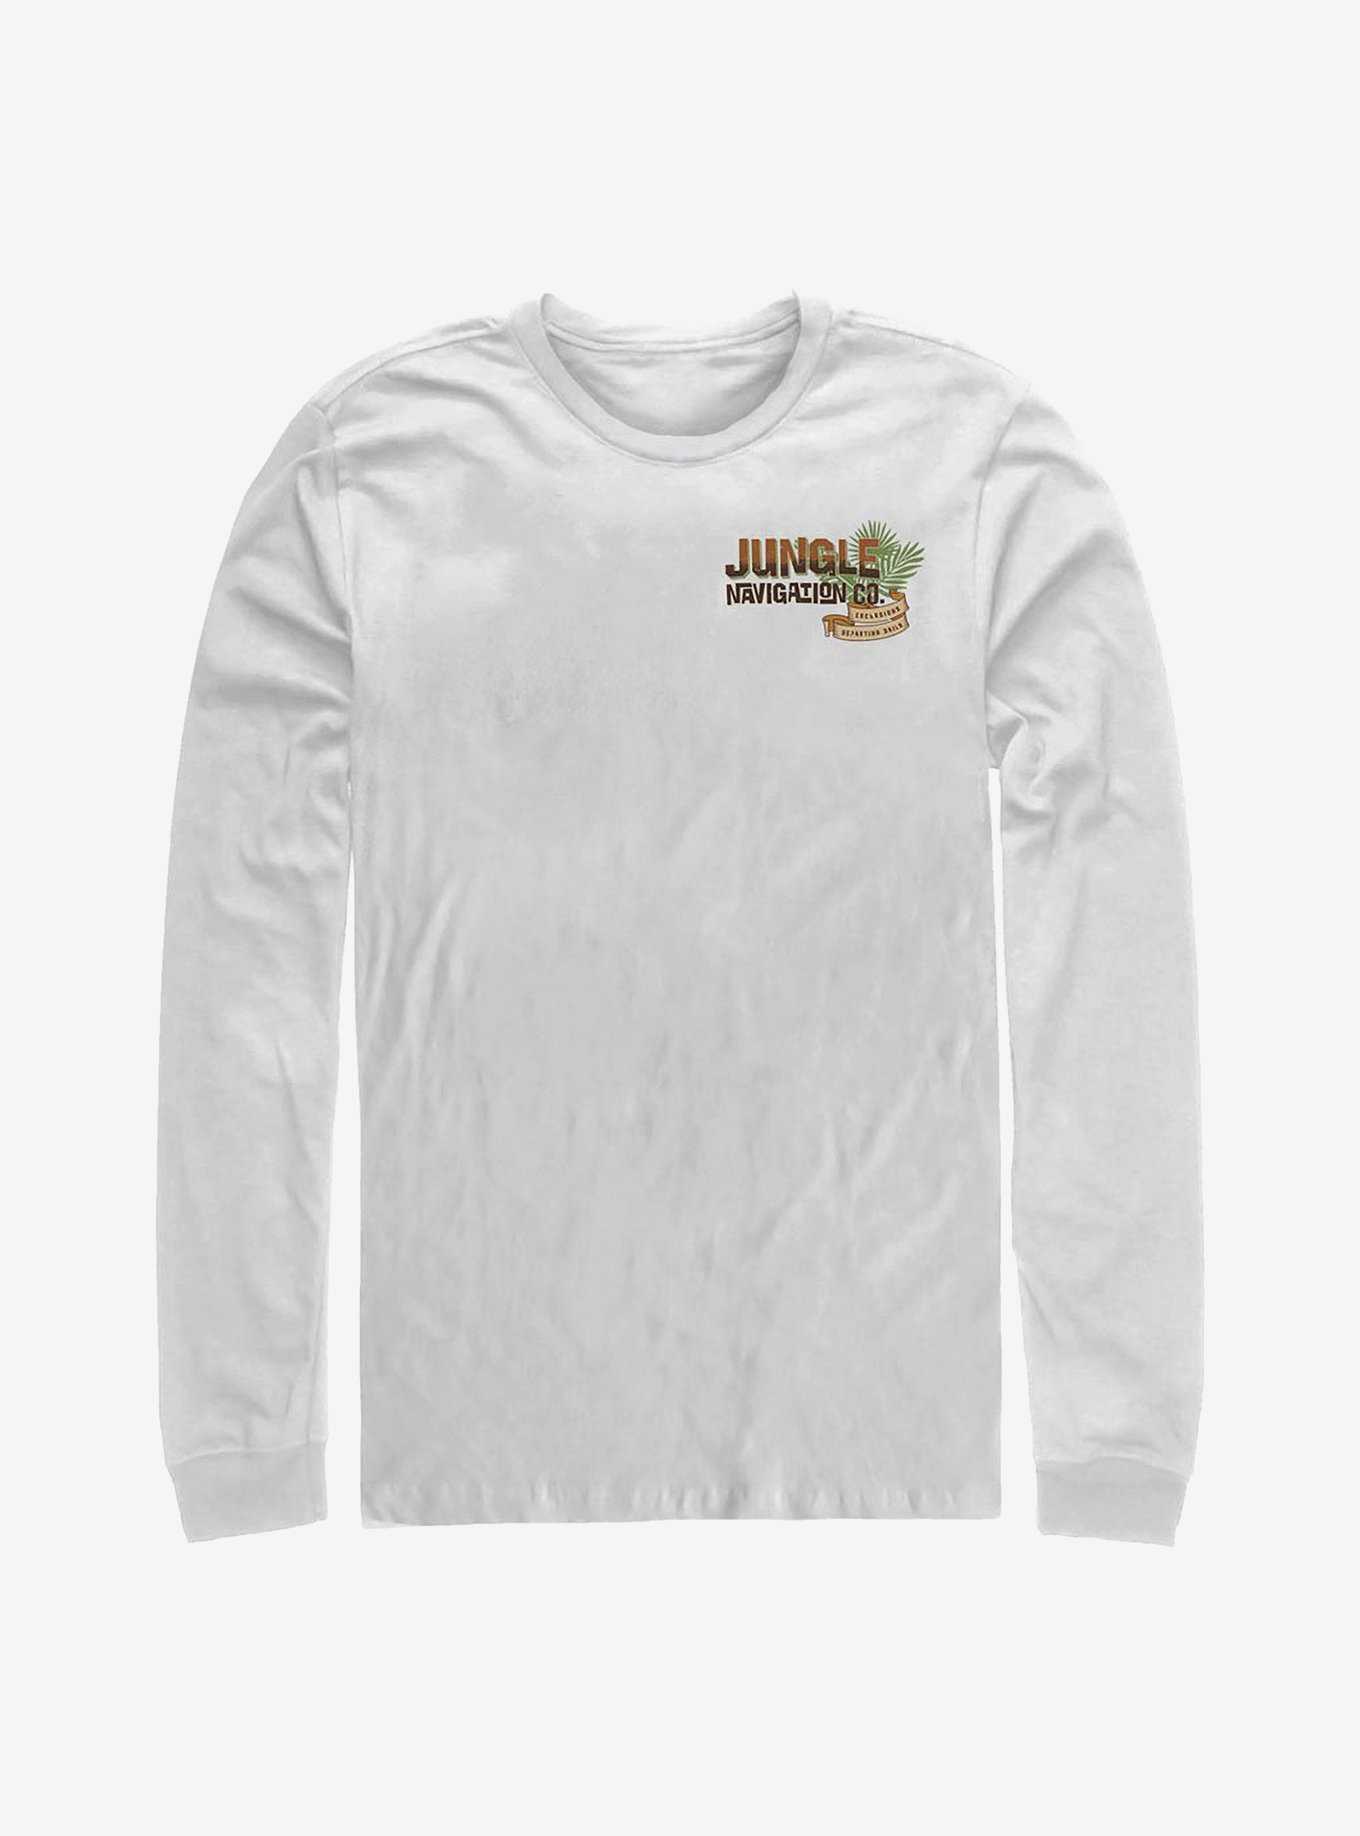 Disney Jungle Cruise Jungle Navigation Co. Long-Sleeve T-Shirt, , hi-res